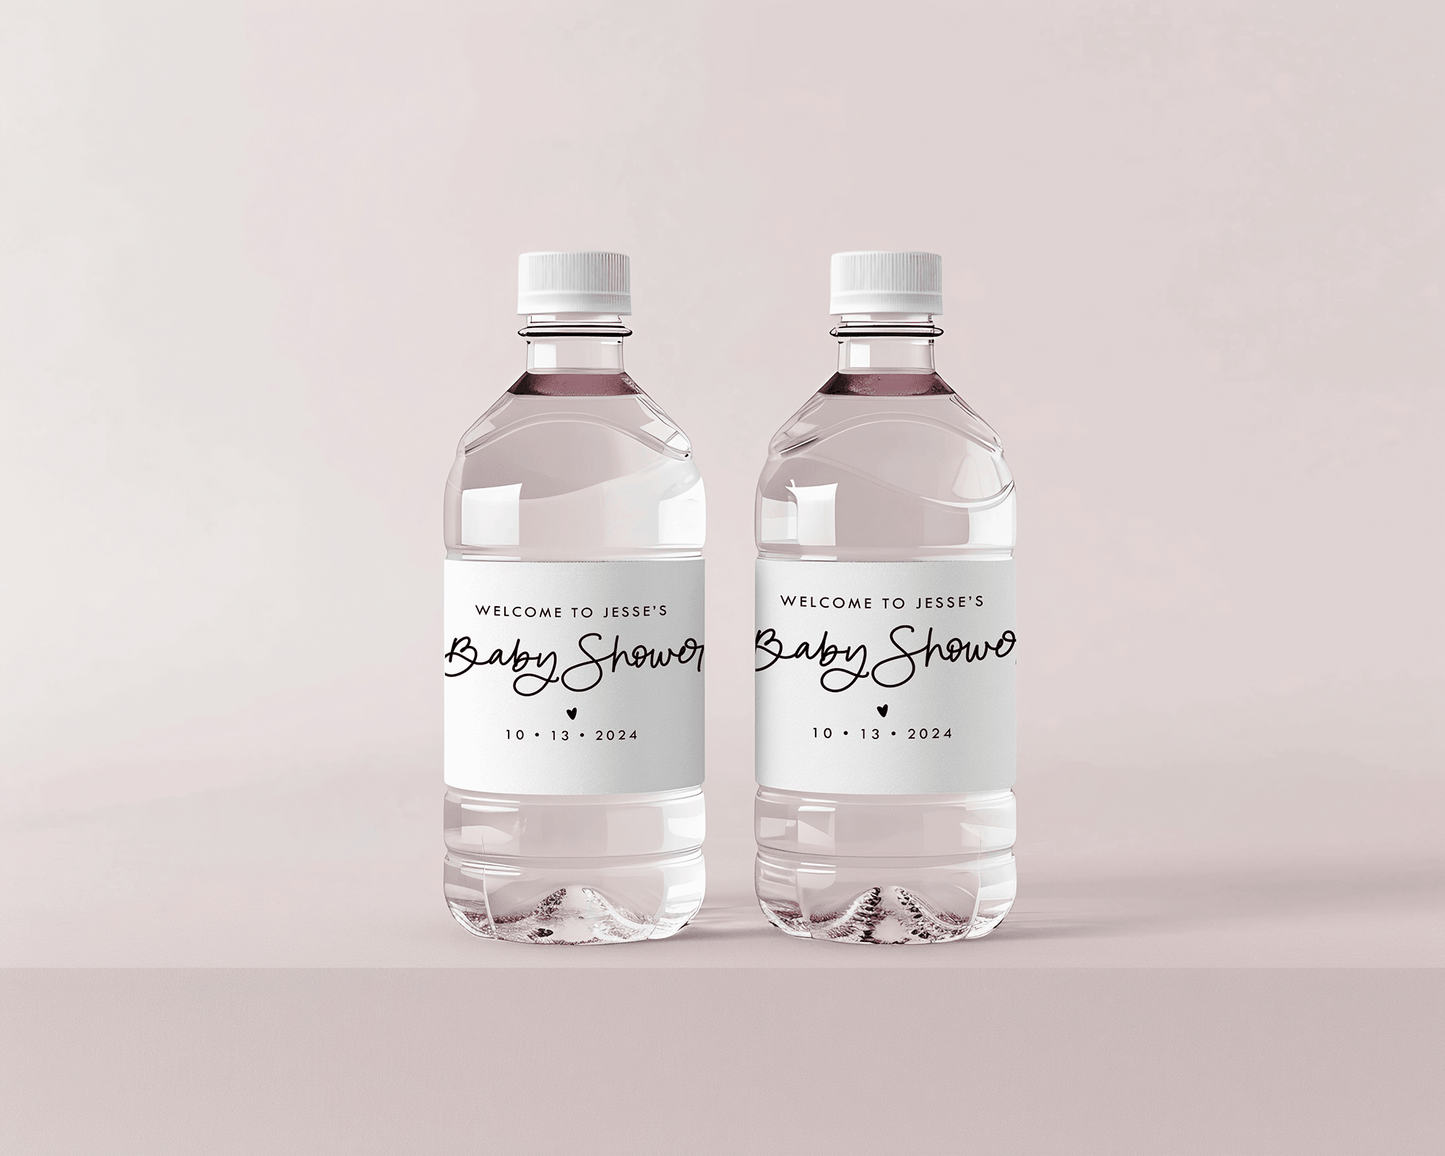 Baby Shower Water Bottle Labels - Plum Grove Design